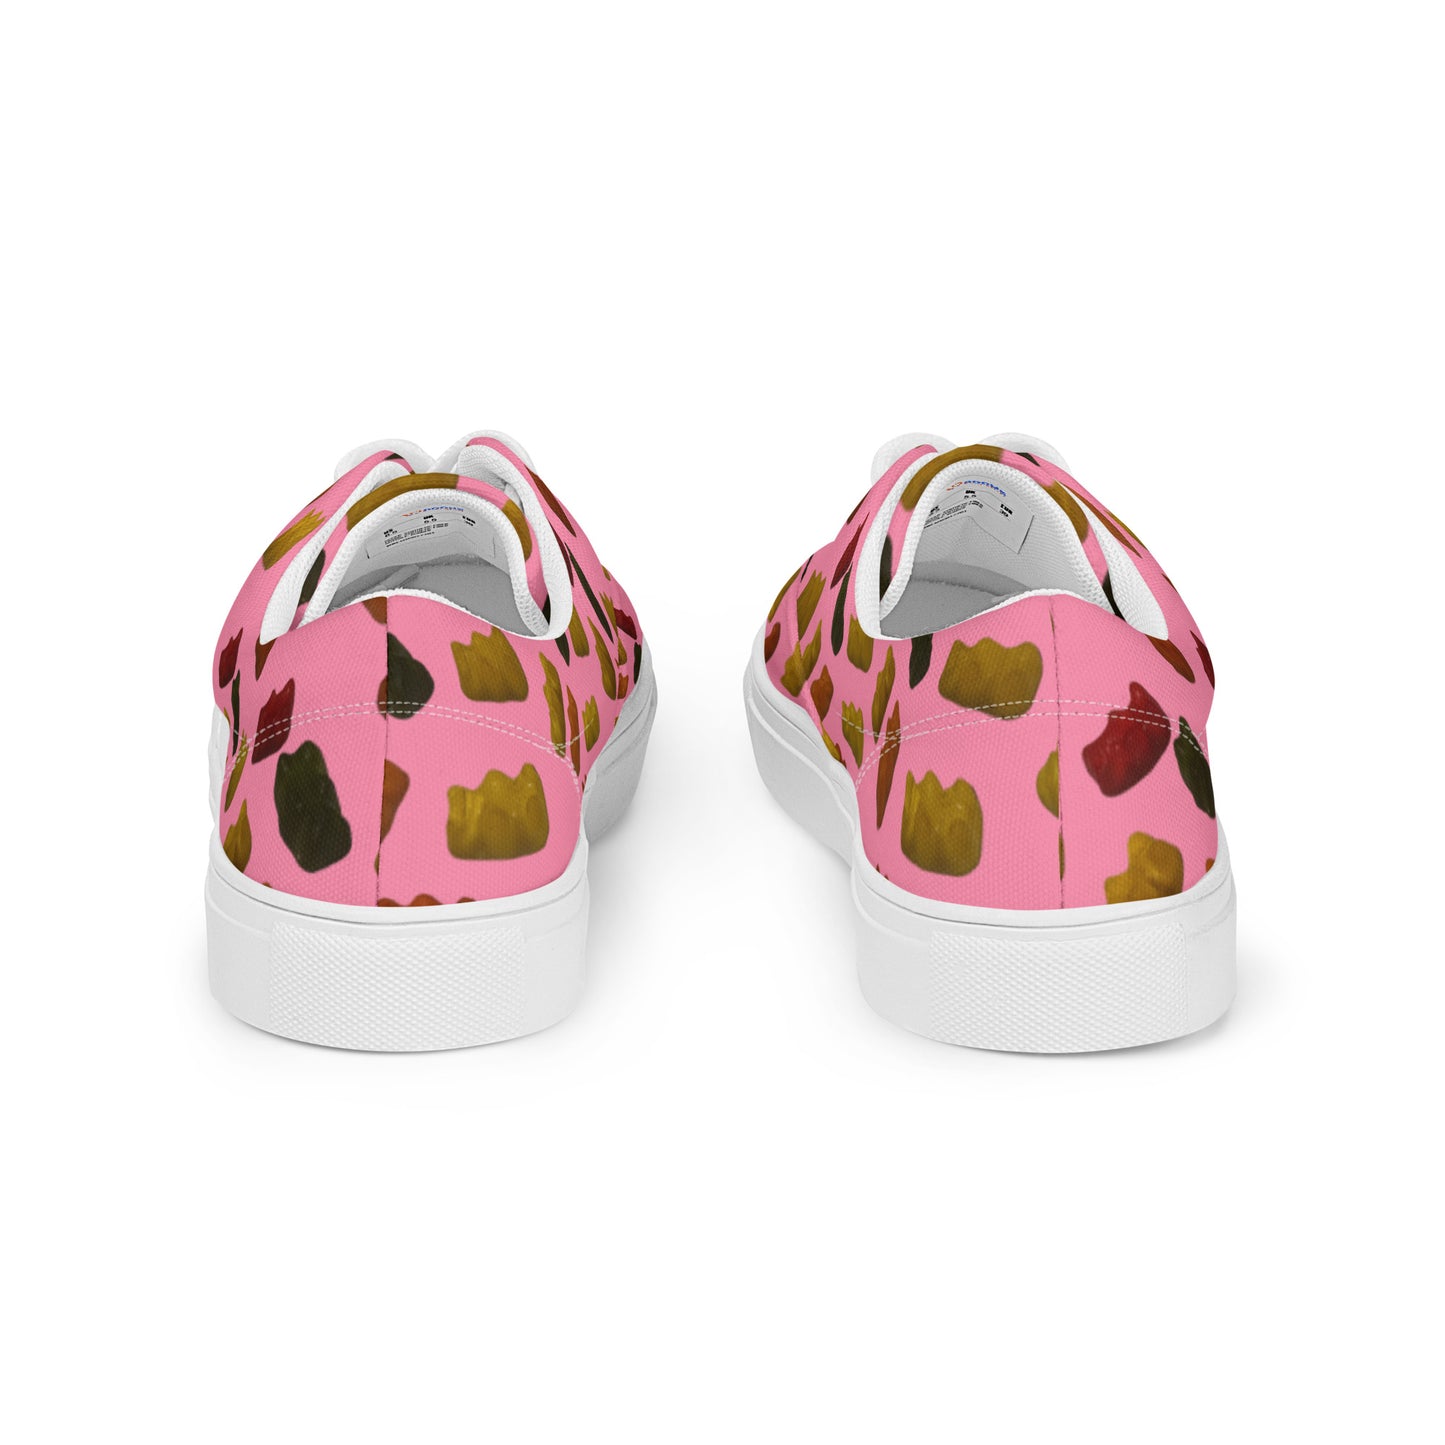 Gummy Bears - Men’s lace-up canvas shoes - Pink